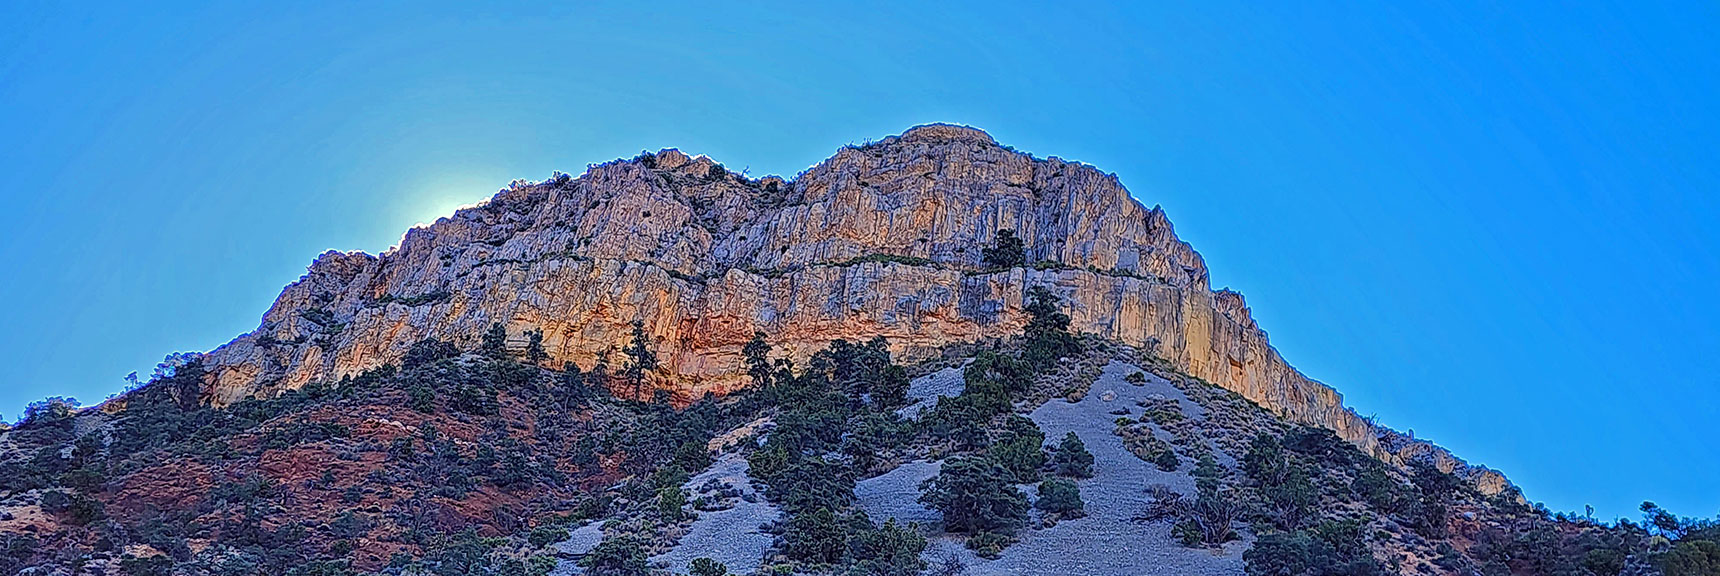 Northern Cliffs of Landmark Bluff Shield the Rising Sun. | Landmark Bluff Circuit | Lovell Canyon, Nevada